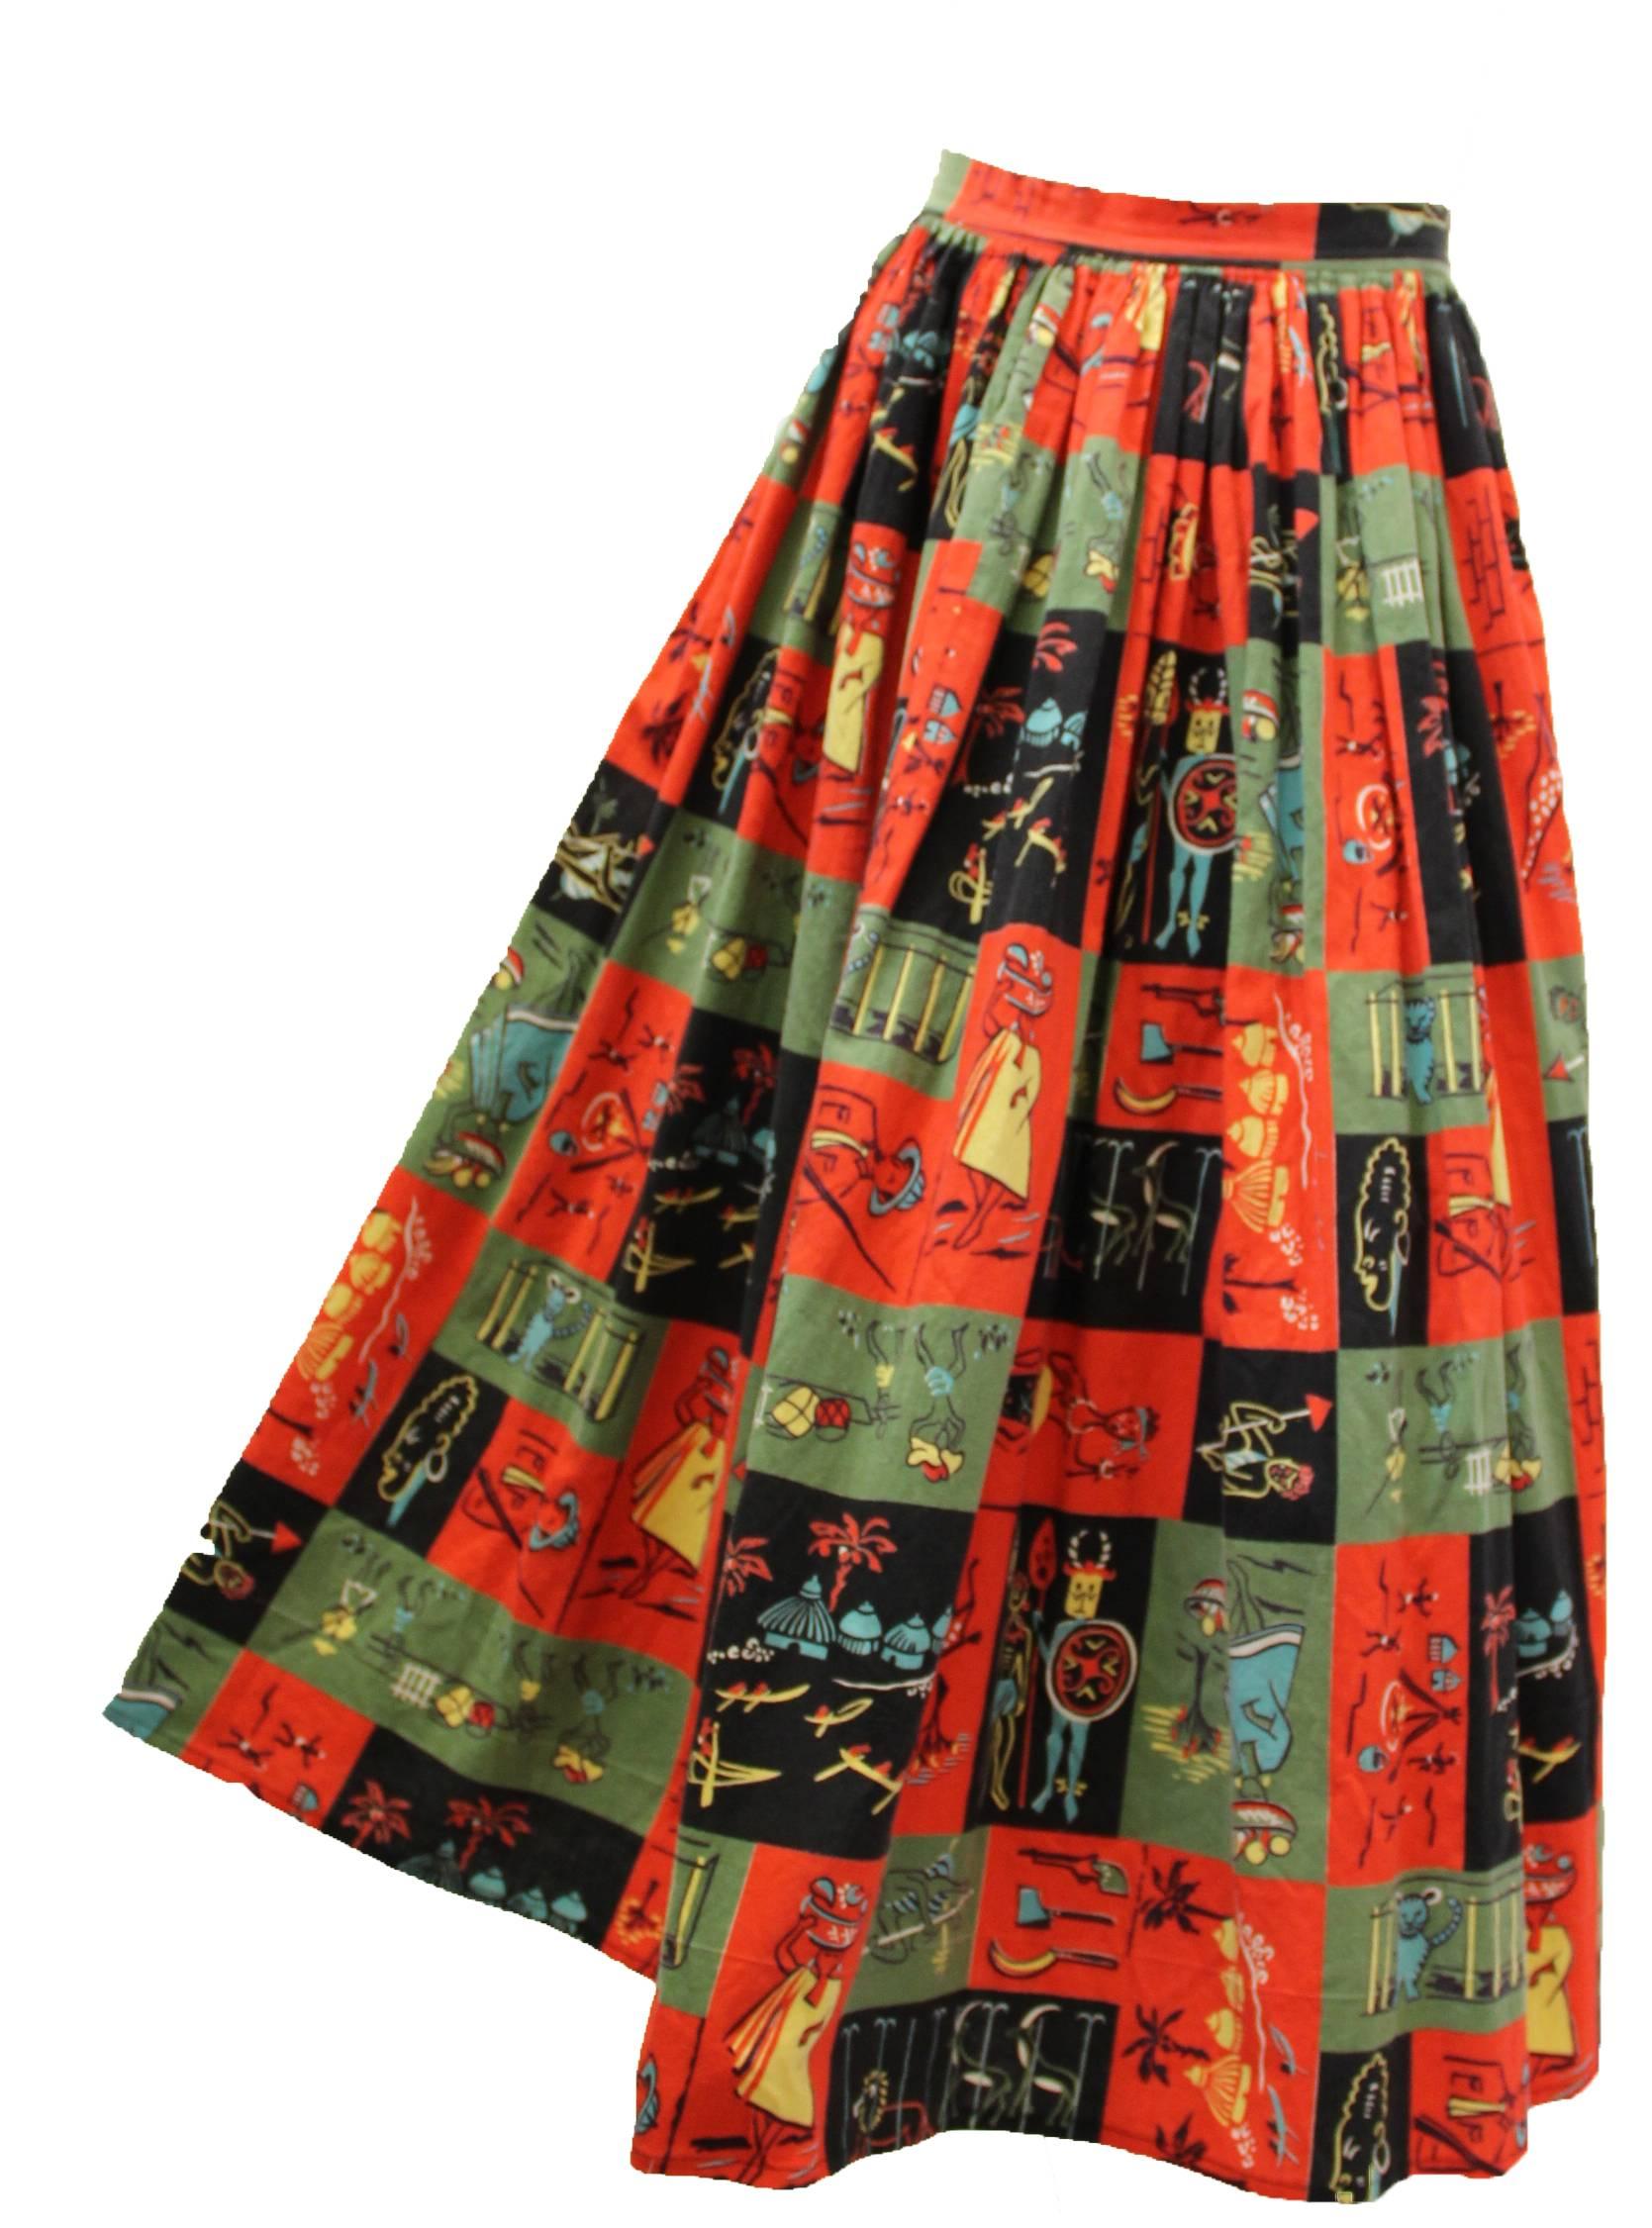 Jungle print 1950s full circle skirt. 100% Cotton. Metal zipper snap closure (as seen in photograph) 

Measurements:
Waist: 24